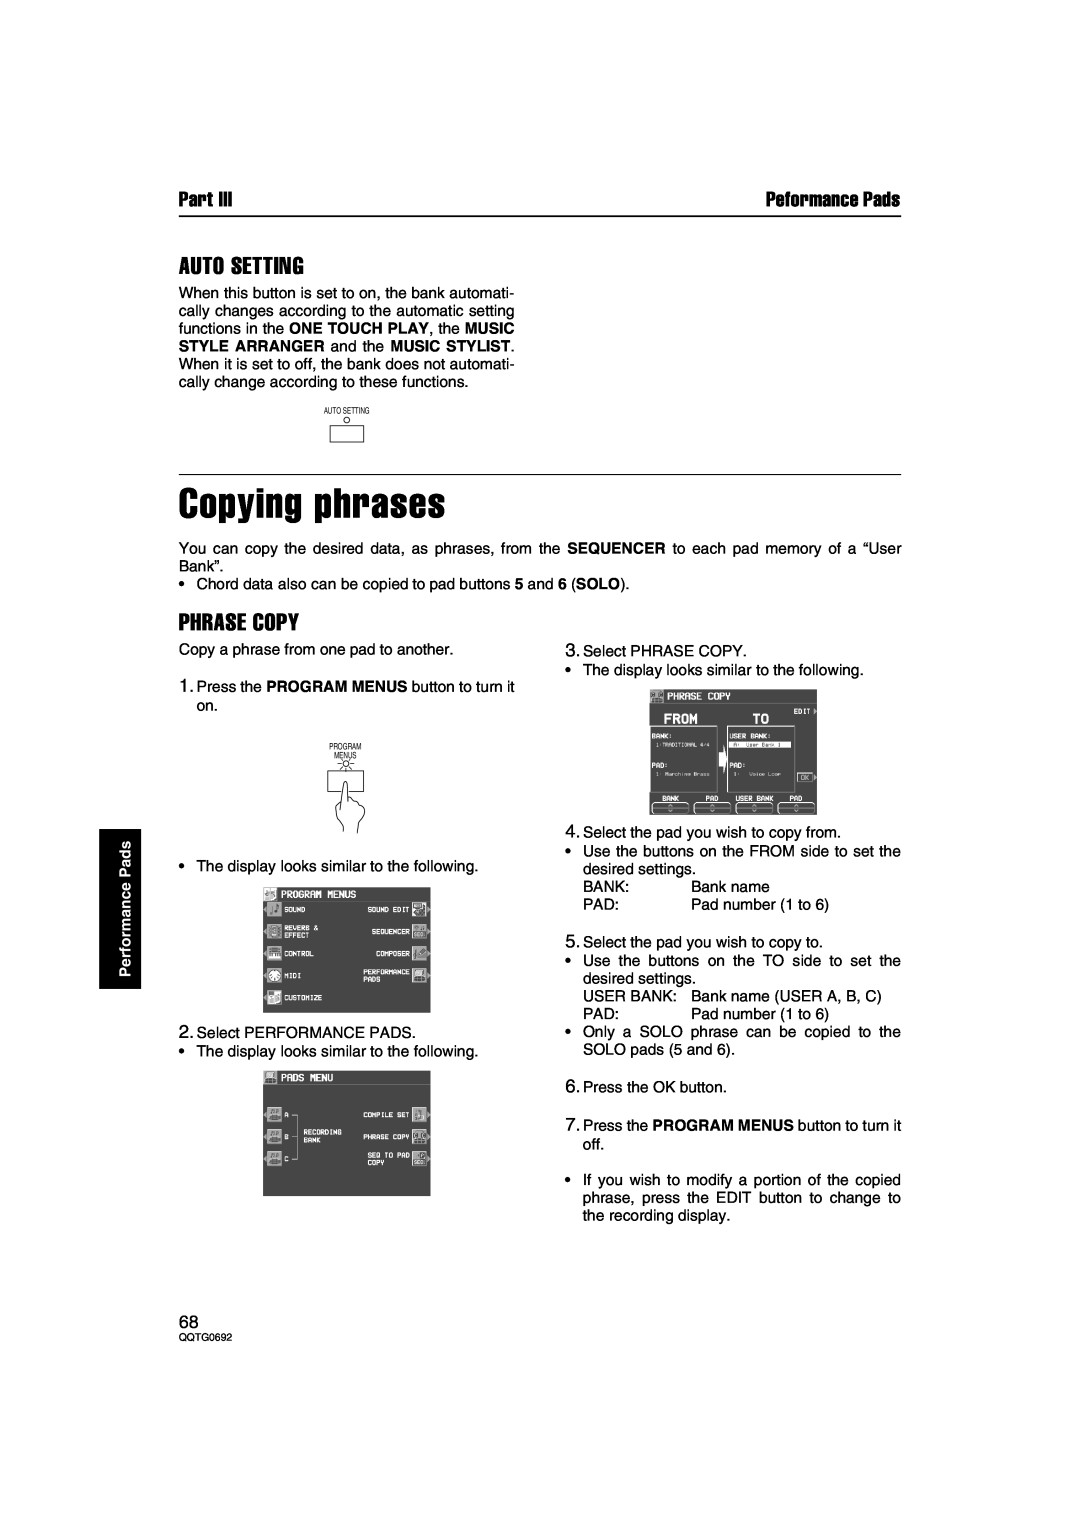 Panasonic SX-KN2600, SX-KN2400 manual Copying phrases, Auto Setting, Phrase Copy, Peformance Pads, Part, Performance Pads 